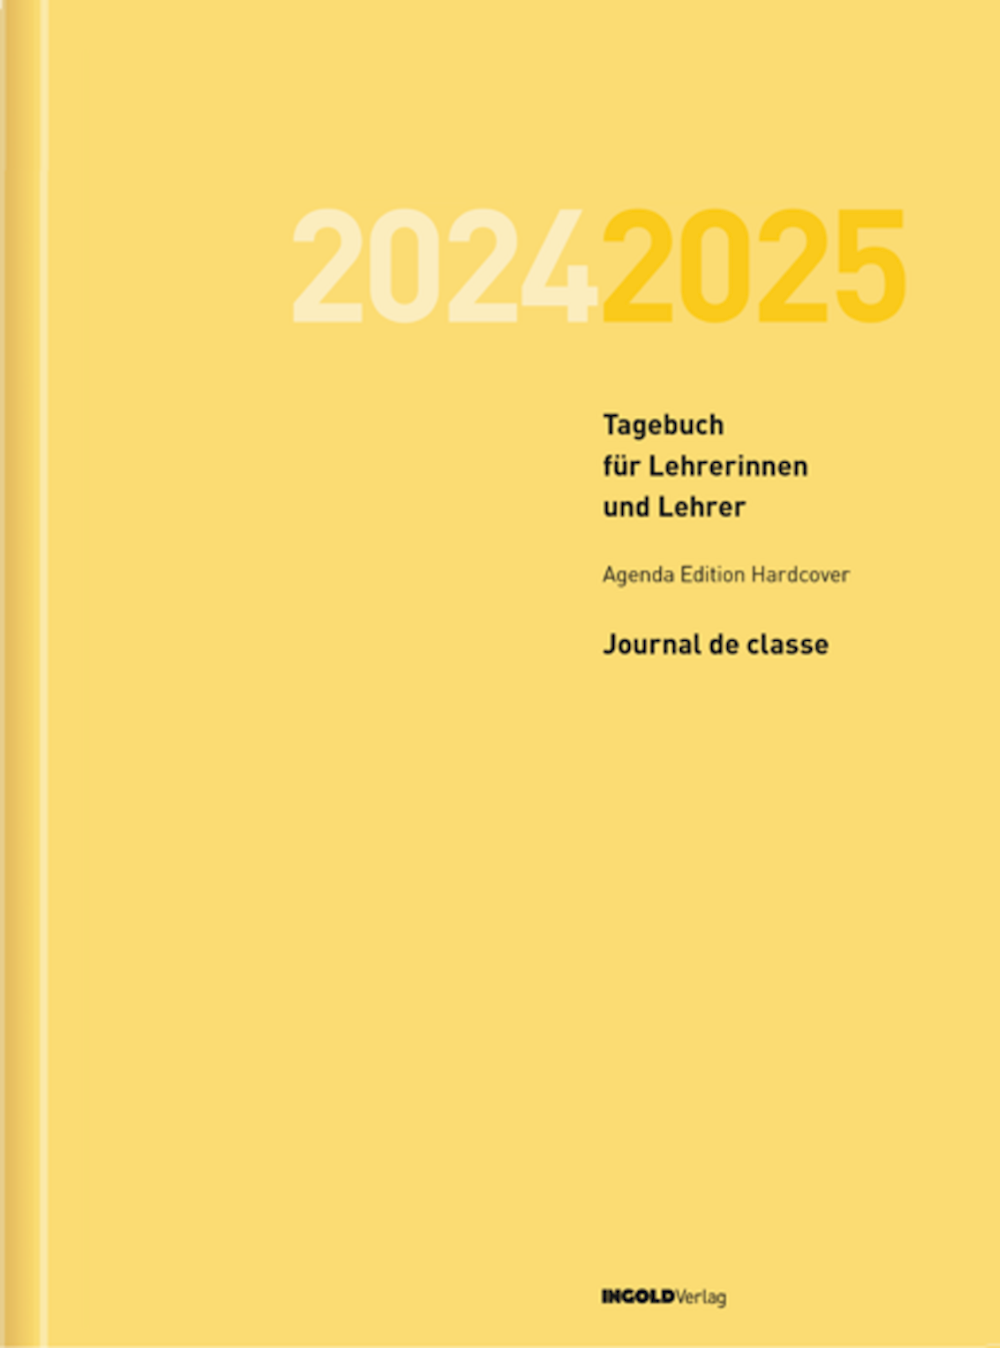 Tagebuch für Lehrpersonen 2024/2025  Agenda Editio